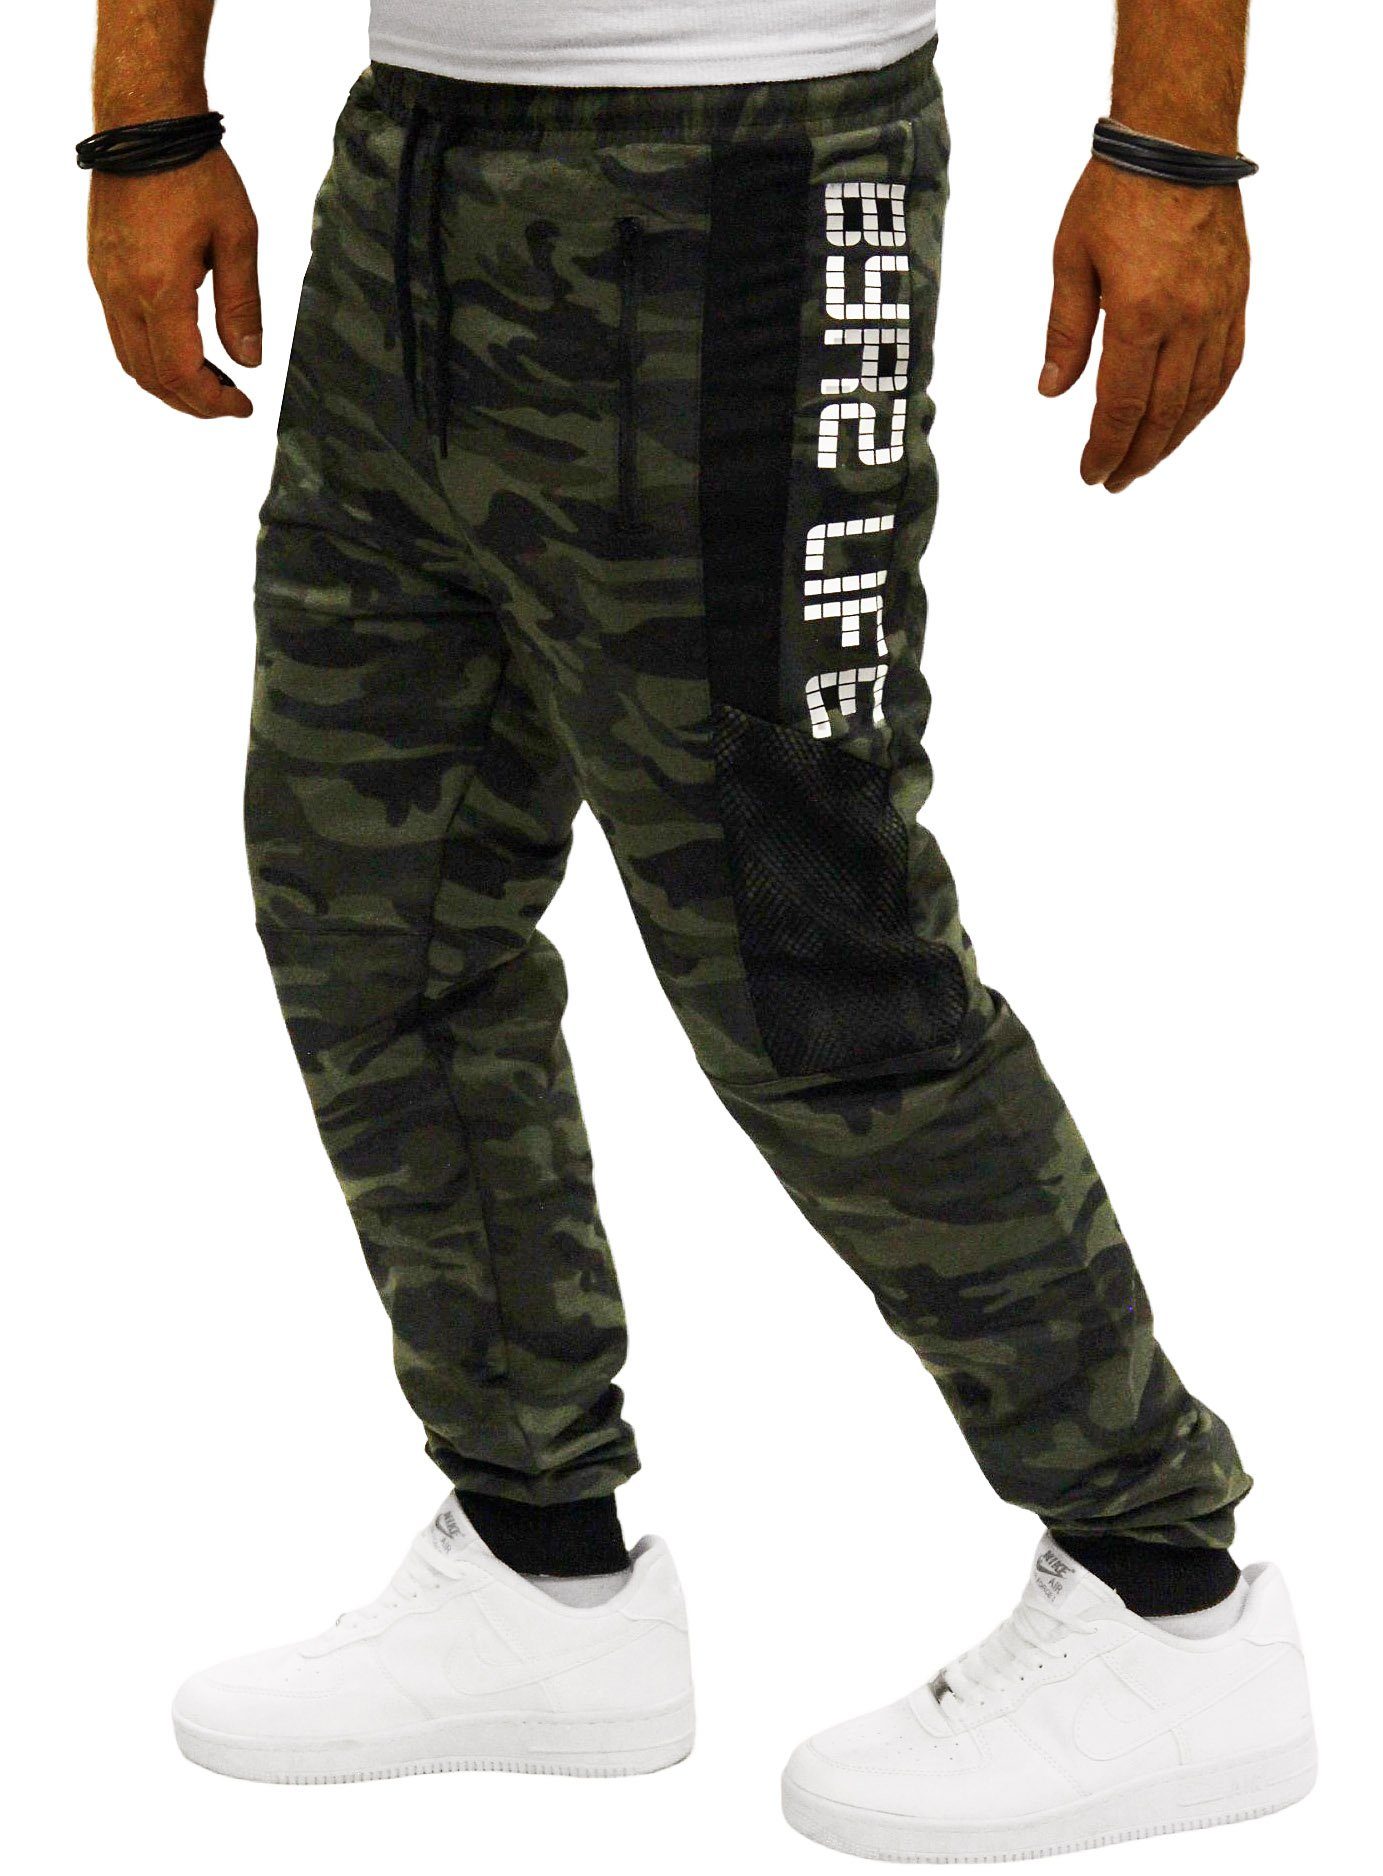 RMK Sporthose Herren Trainingshose Jogginghose Fitnesshose Camouflage Army Tarn Hose Camou-Dunkel (H.79)